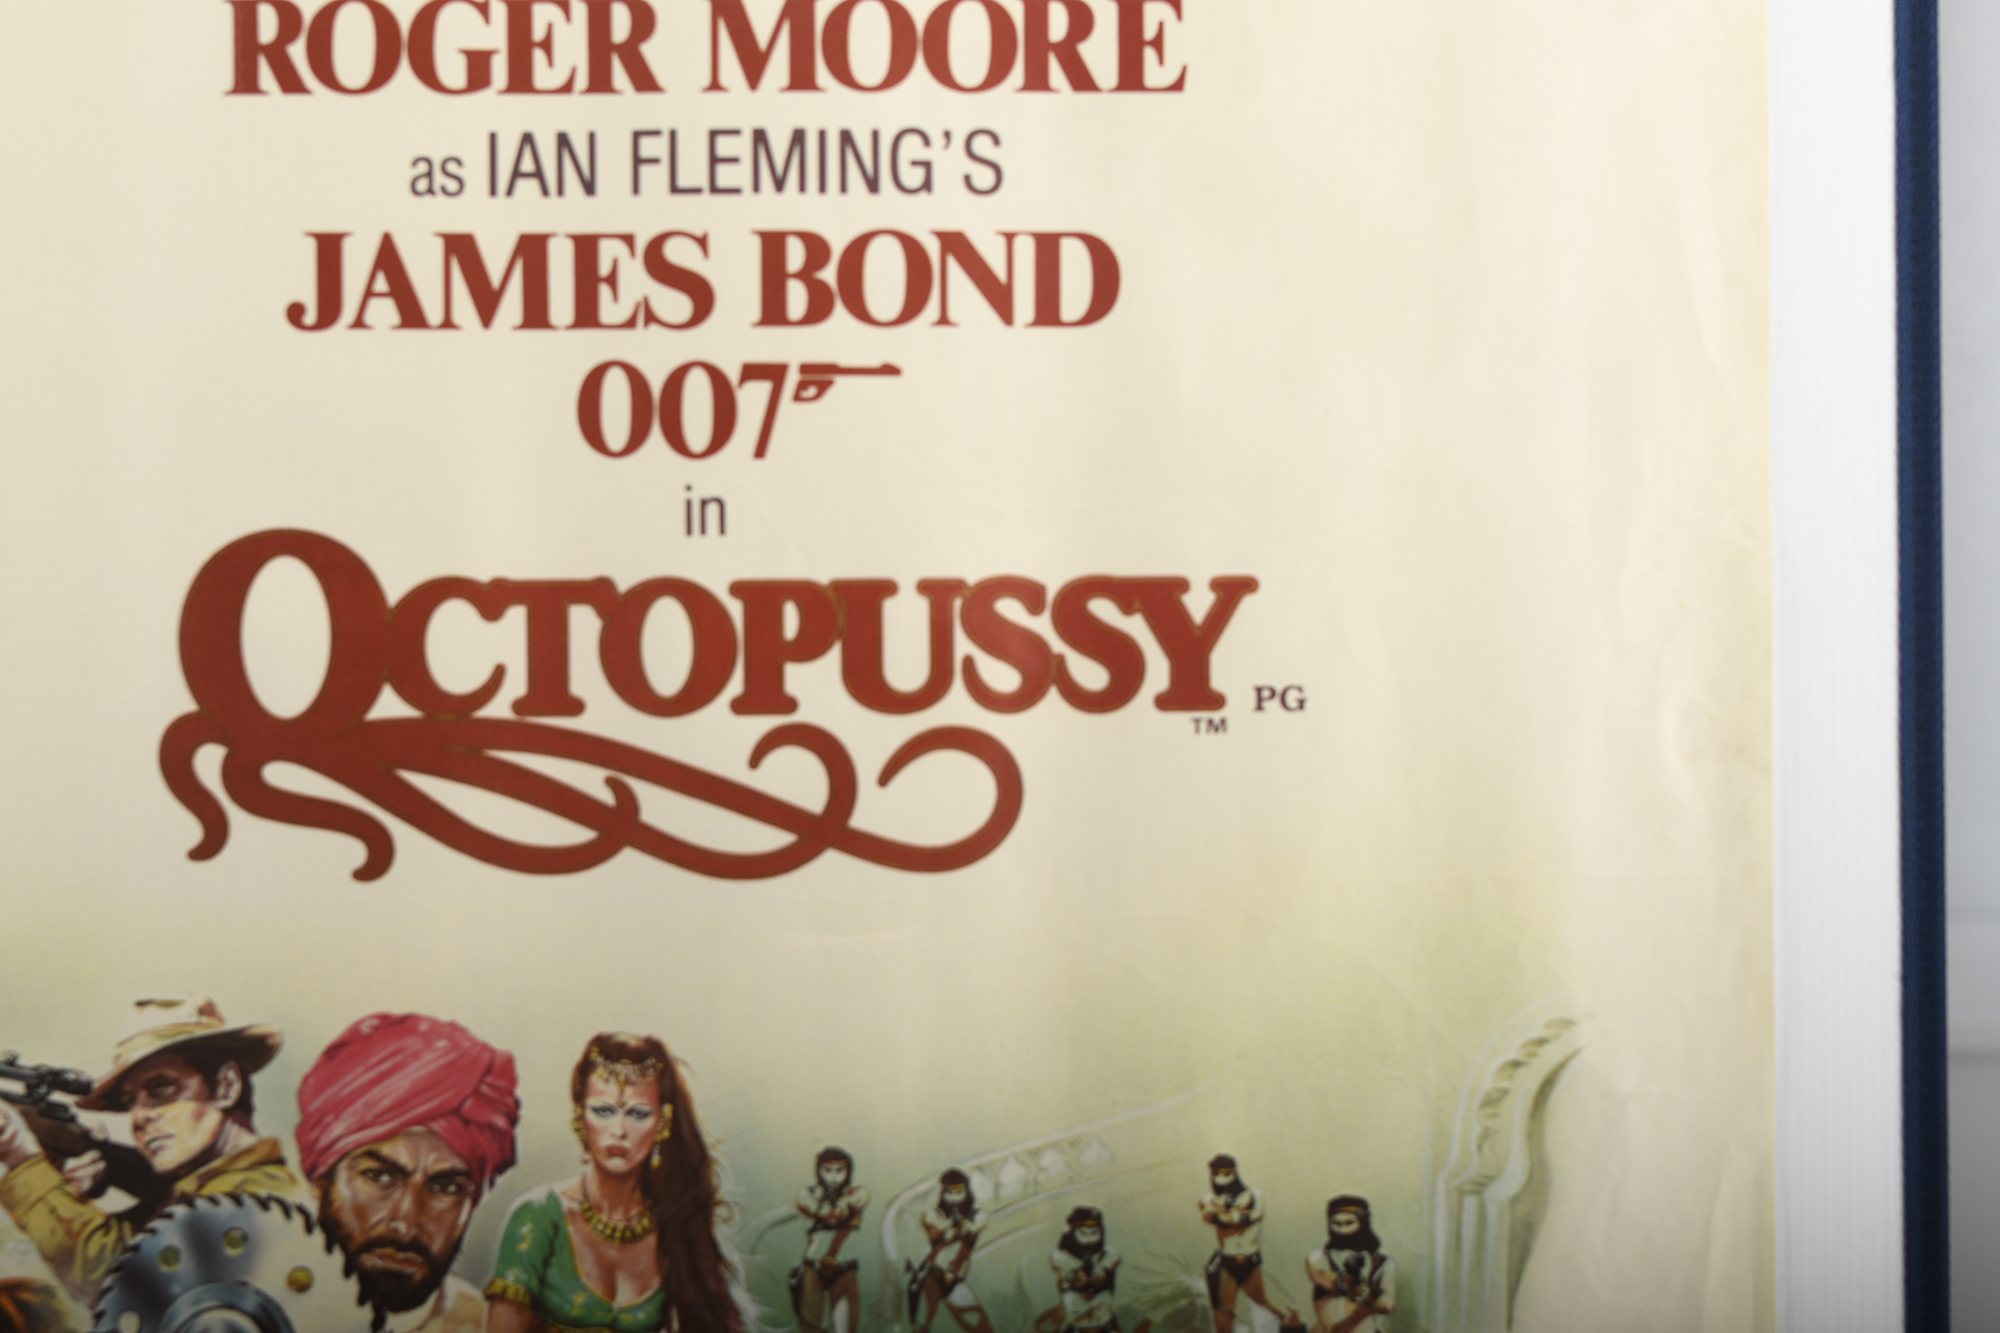 Original 'Octopussy' Cinema Poster - Image 4 of 8